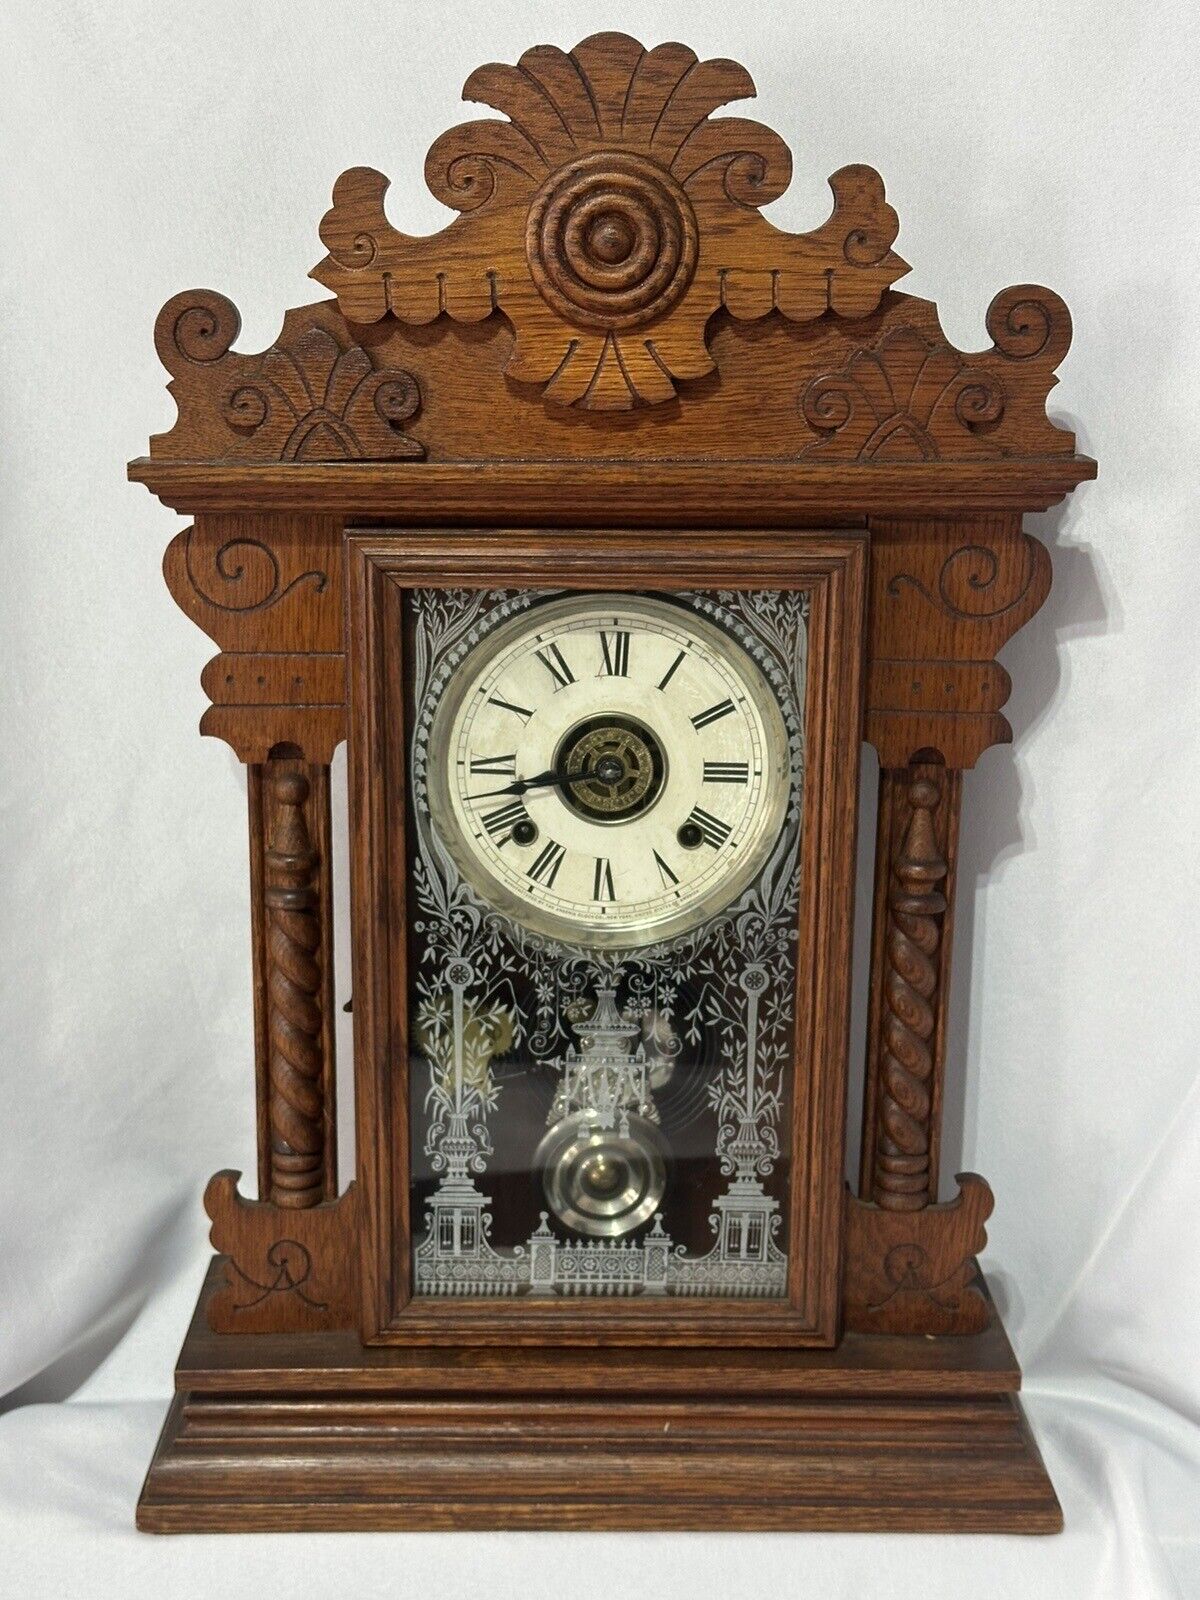 ANSONIA Clock Co.  New York  Mantel Clock  Early 1900’s  Antique  Rare